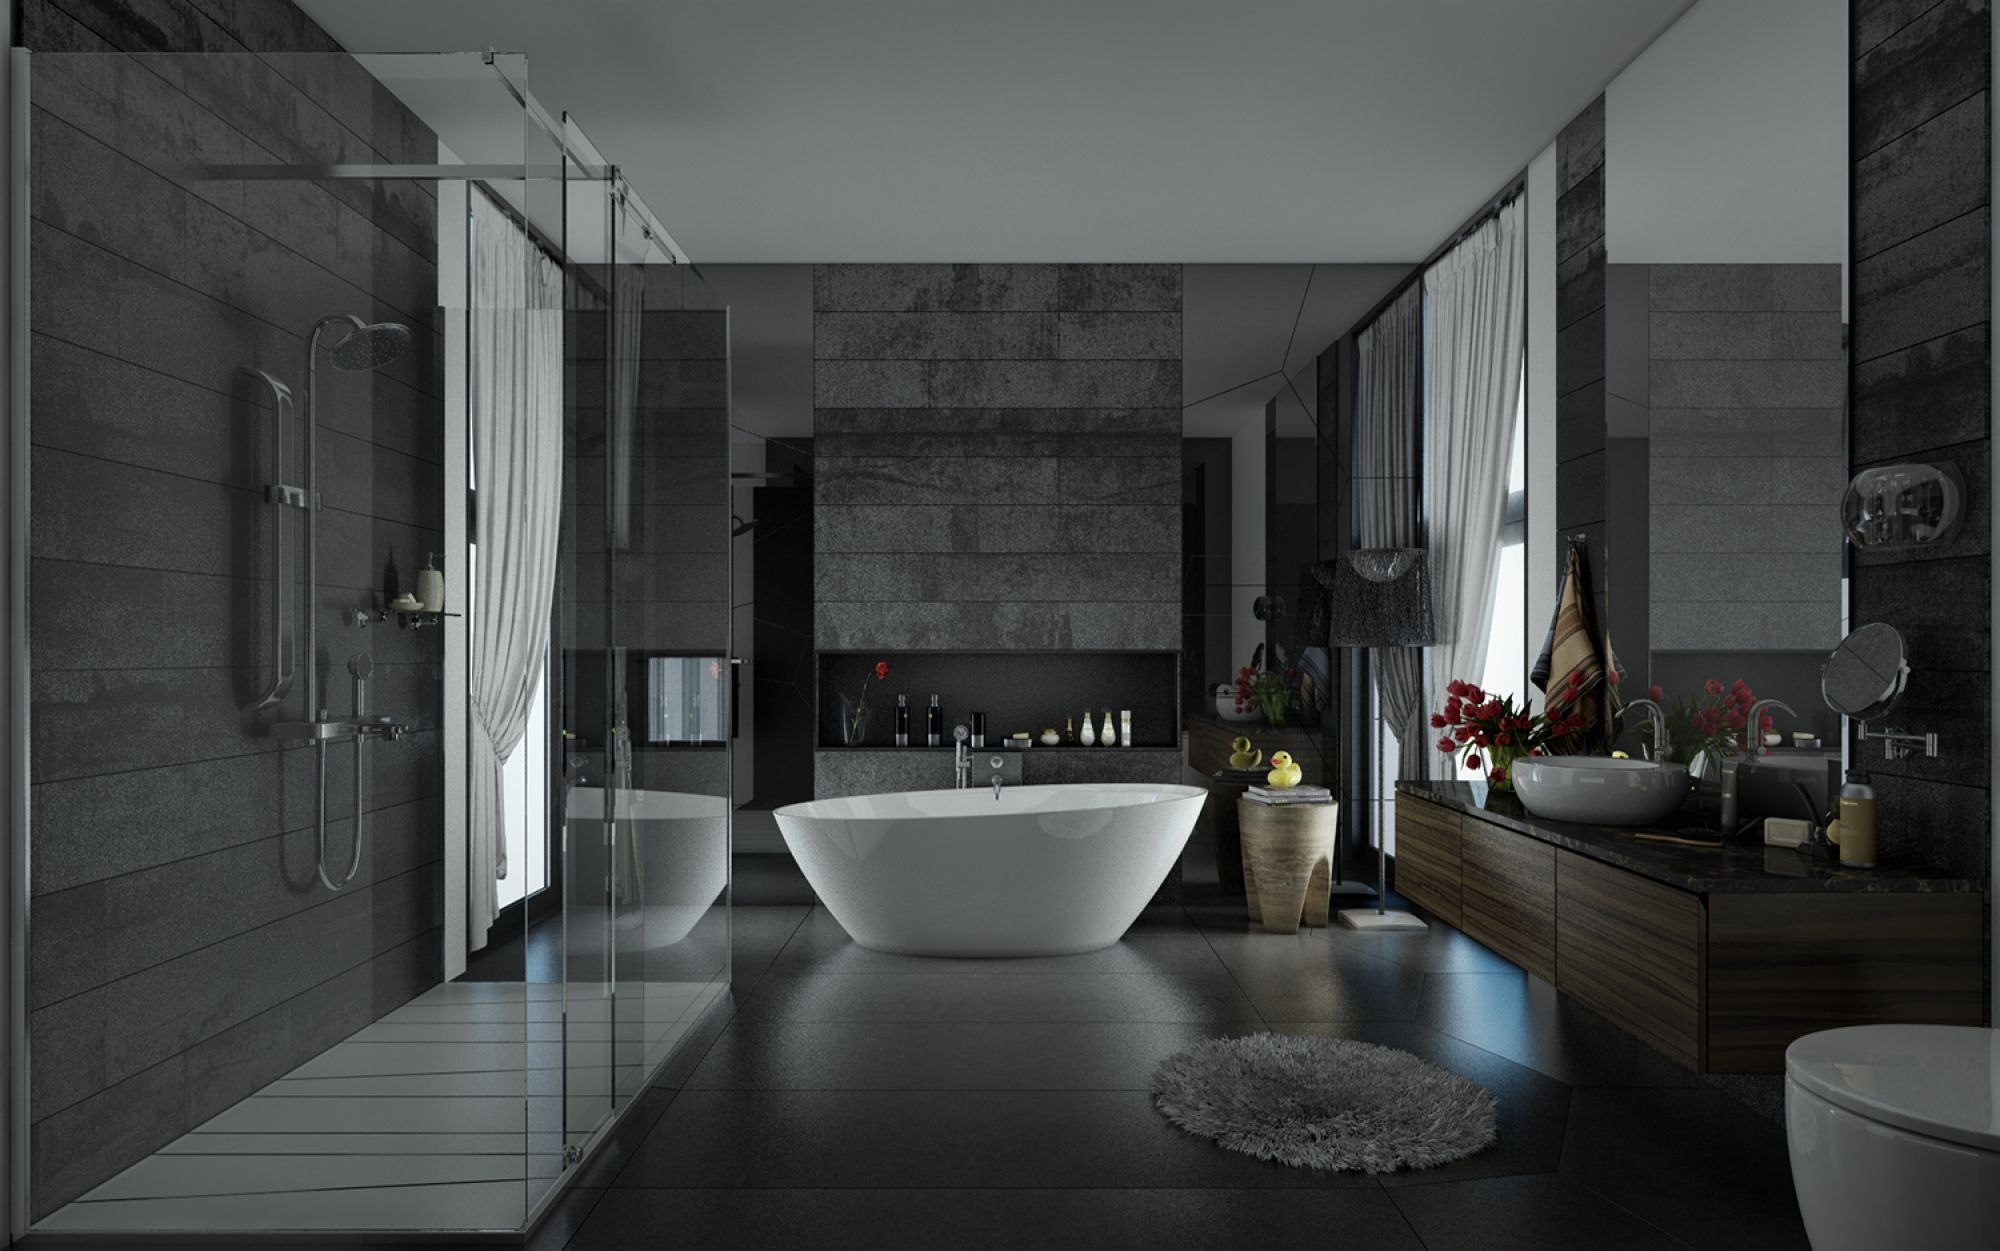 modern bathroom design "width =" 2000 "height =" 1251 "srcset =" https://mileray.com/wp-content/uploads/2020/05/1588515743_850_Smart-Tips-Renovating-Spacious-Bathroom-Interior-Designs-With-Simple-and.jpg 2000w, https://mileray.com/ wp -content / uploads / 2016/10 / Blalank-Visualization-300x188.jpg 300w, https://mileray.com/wp-content/uploads/2016/10/Blalank-Visualization-768x480.jpg 768w, https: // myfashionos .com / wp-content / uploads / 2016/10 / Blalank-Visualization-1024x641.jpg 1024w, https://mileray.com/wp-content/uploads/2016/10/Blalank-Visualization-696x435.jpg 696w, https : //mileray.com/wp-content/uploads/2016/10/Blalank-Visualization-1068x668.jpg 1068w, https://mileray.com/wp-content/uploads/2016/10/Blalank-Visualization-671x420. jpg 671w "sizes =" (maximum width: 2000px) 100vw, 2000px